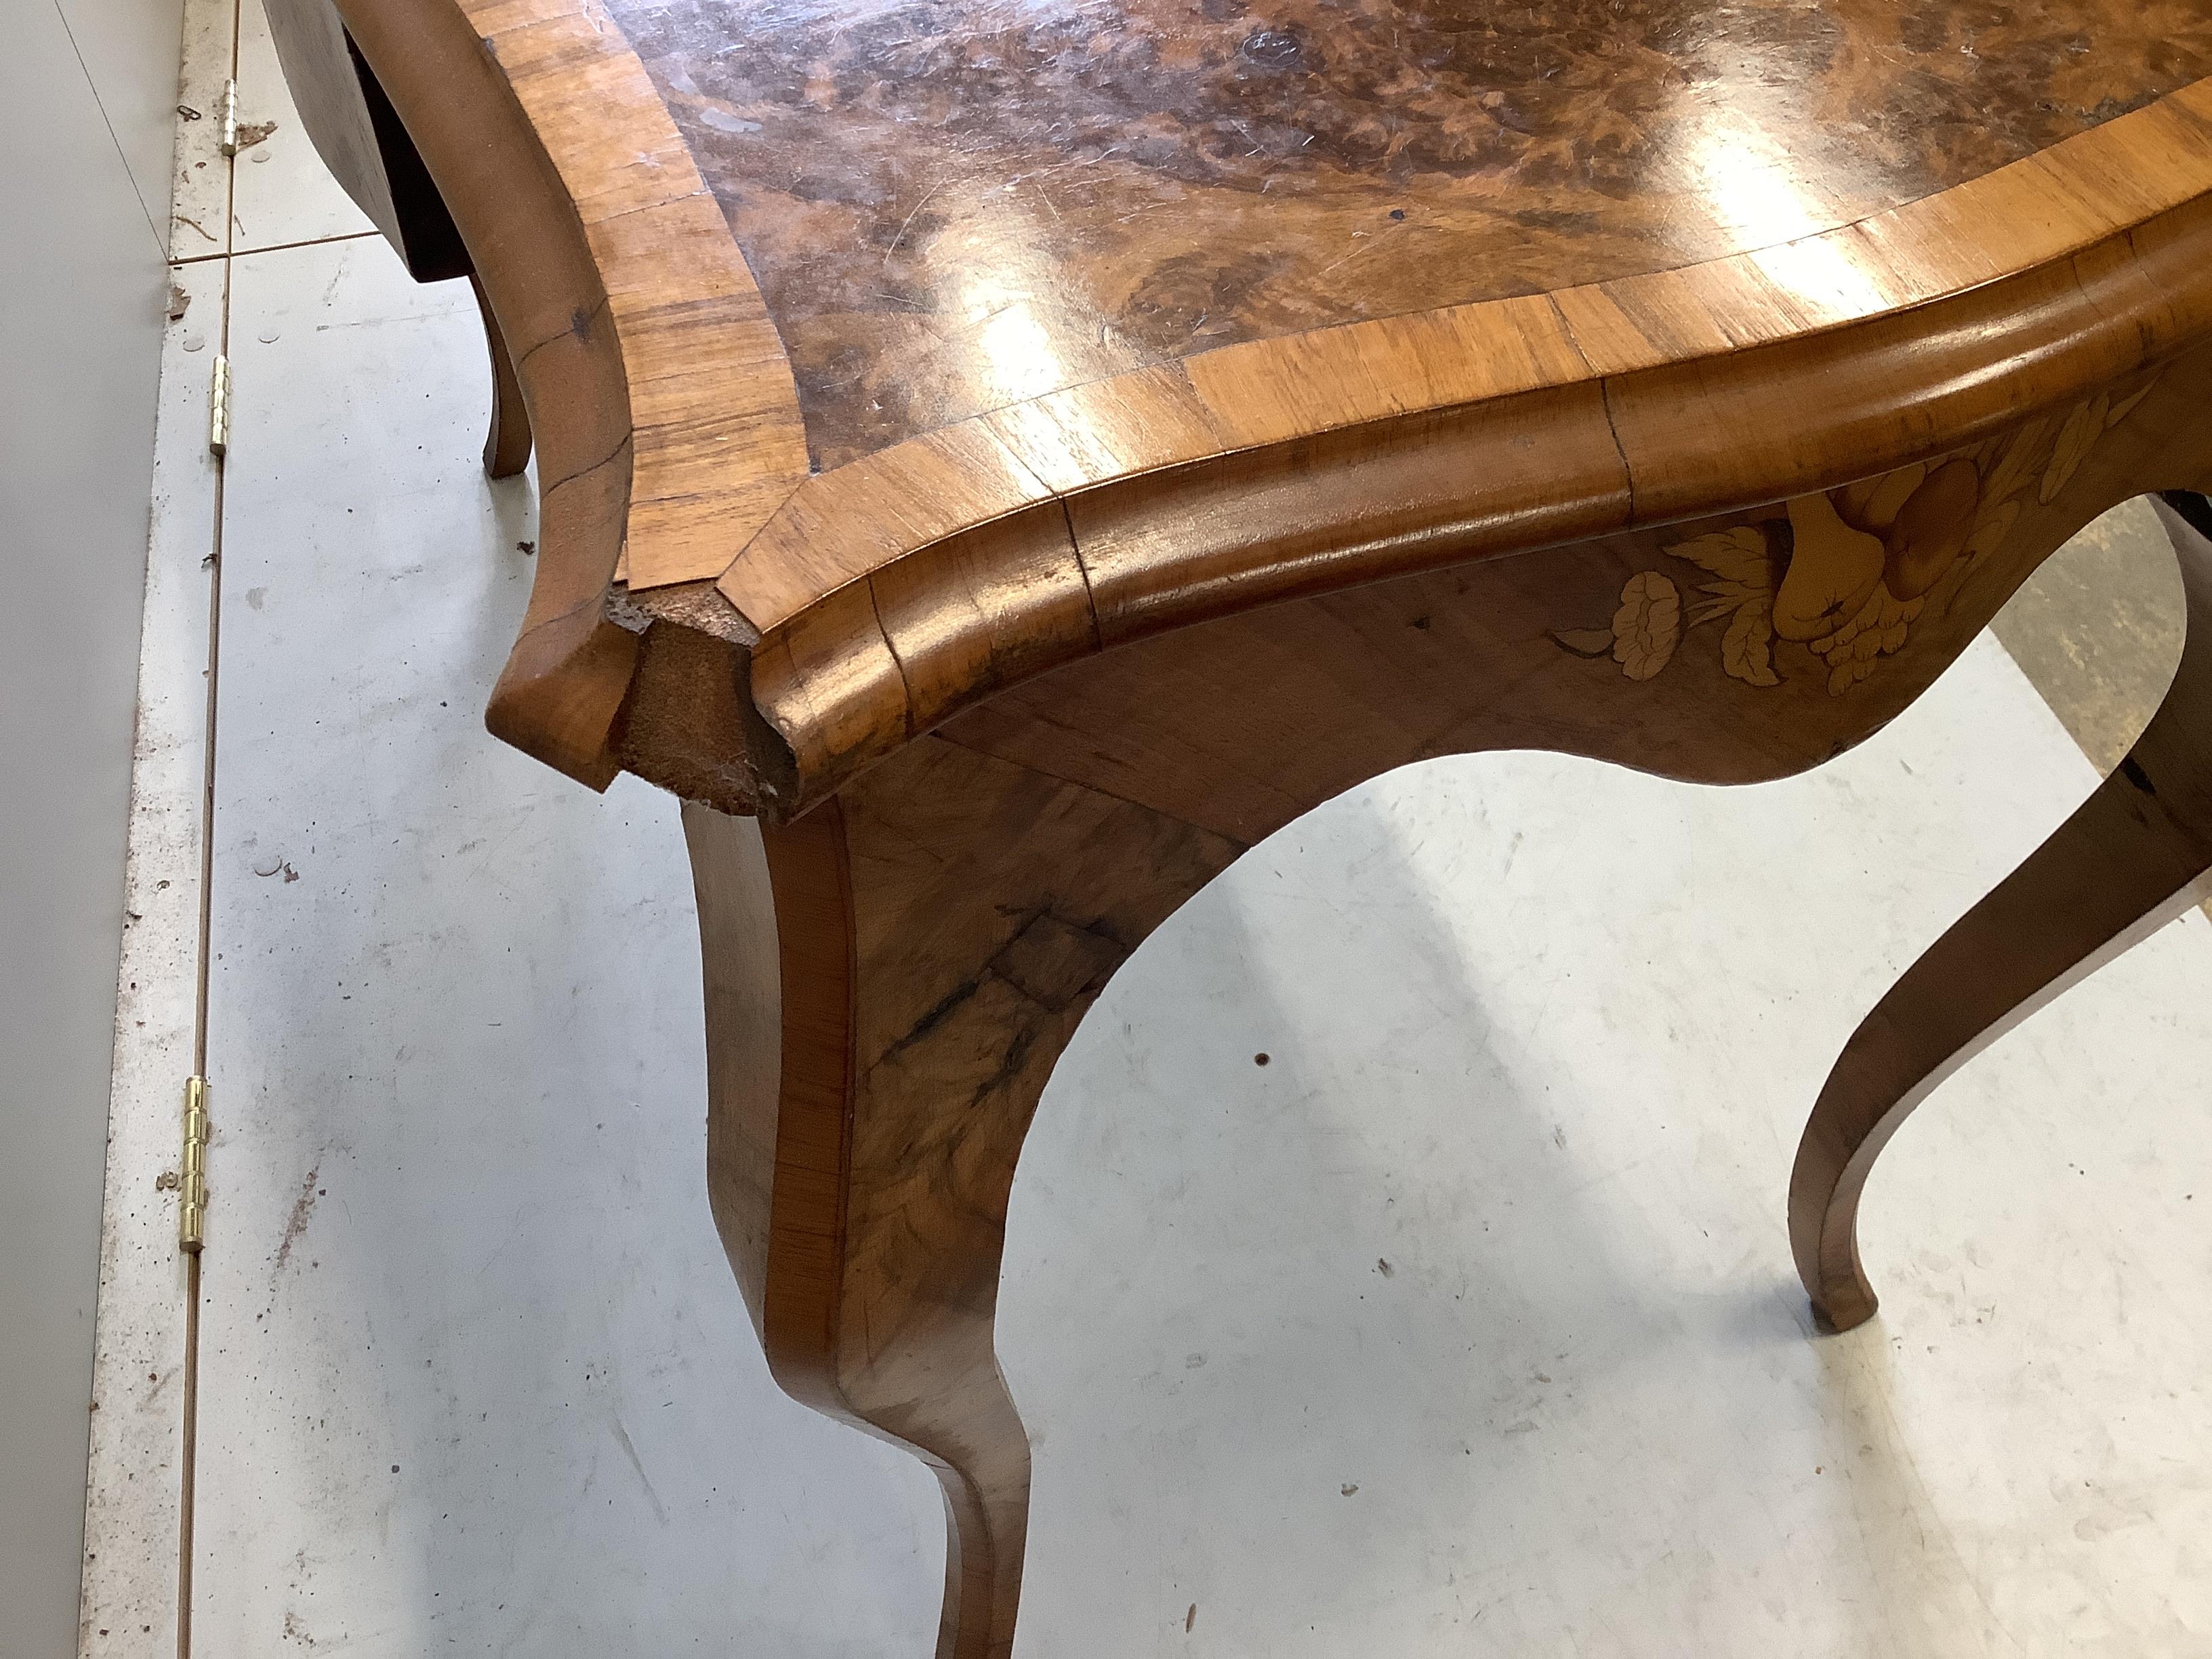 A Victorian marquetry inlaid burr walnut serpentine table, width 104cm, depth 60cm, height 73cm